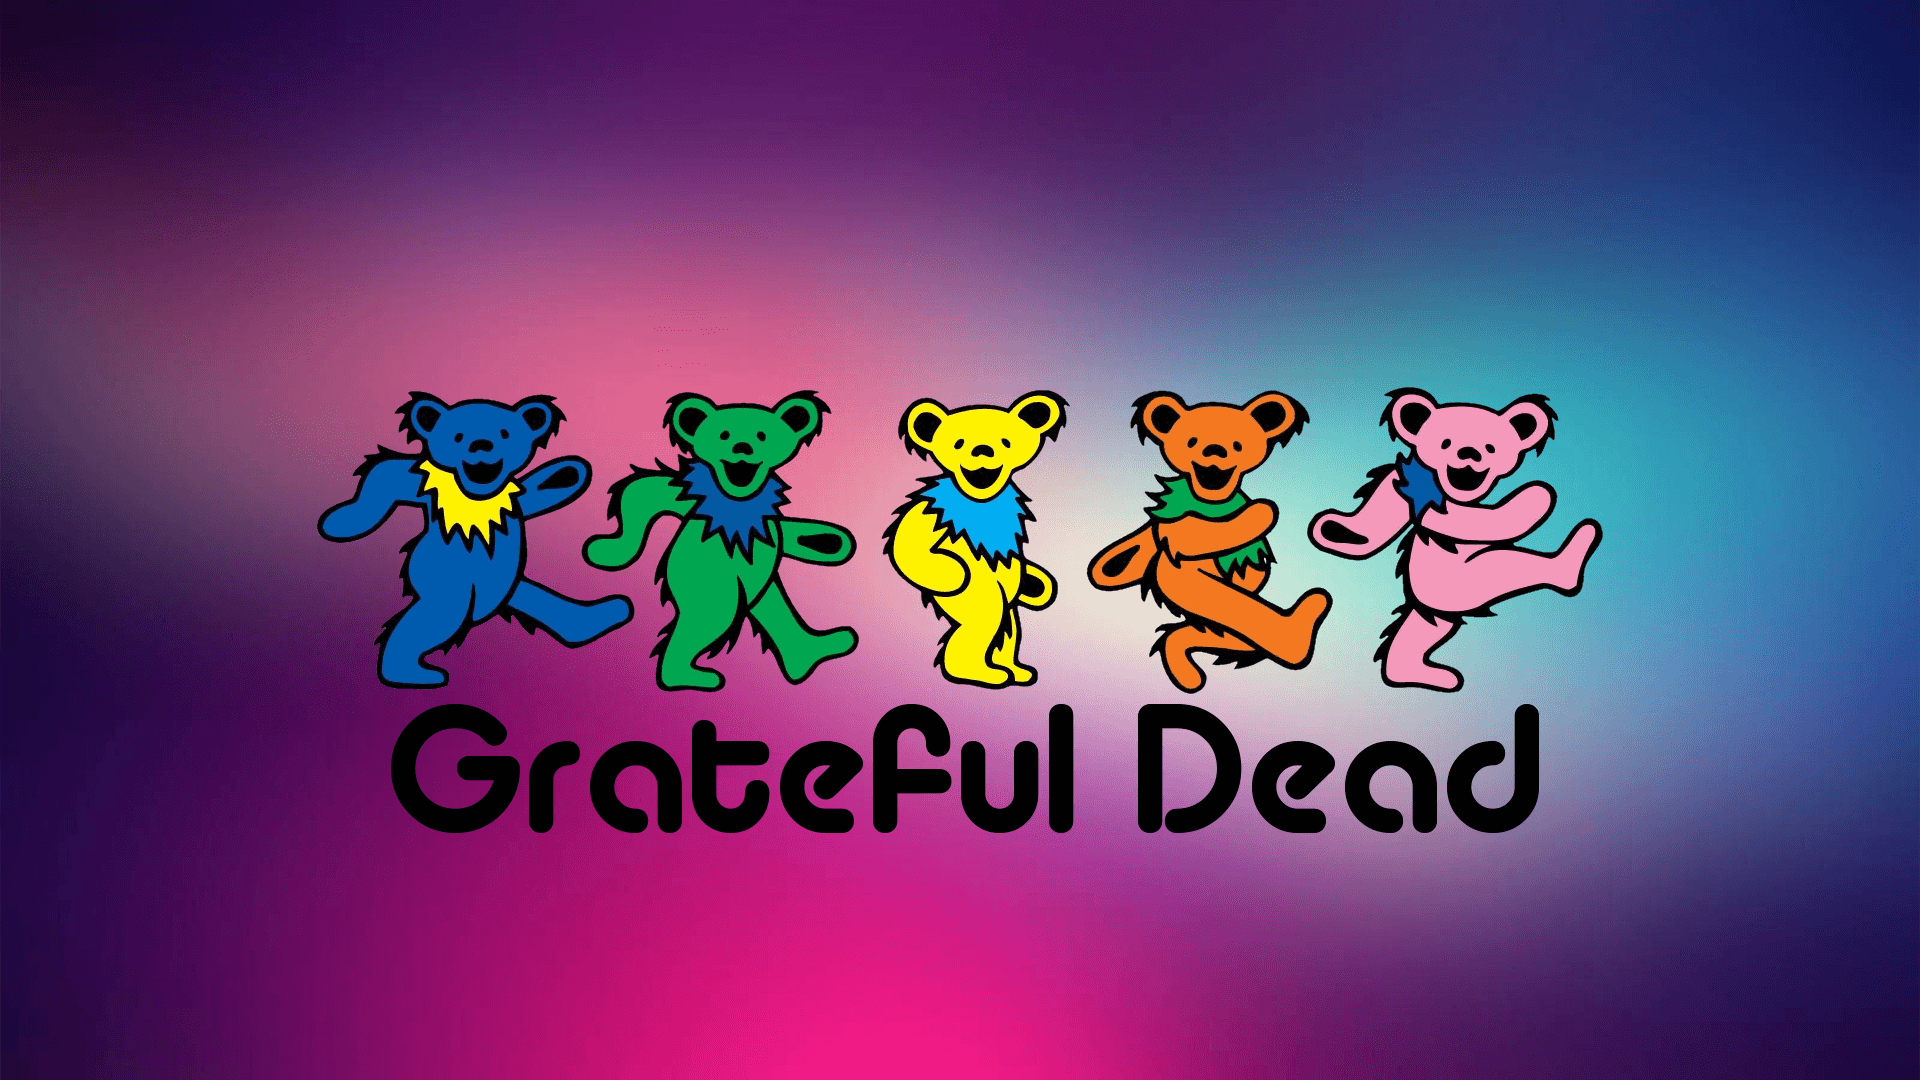 A 1080p Grateful Dead wallpaper I made